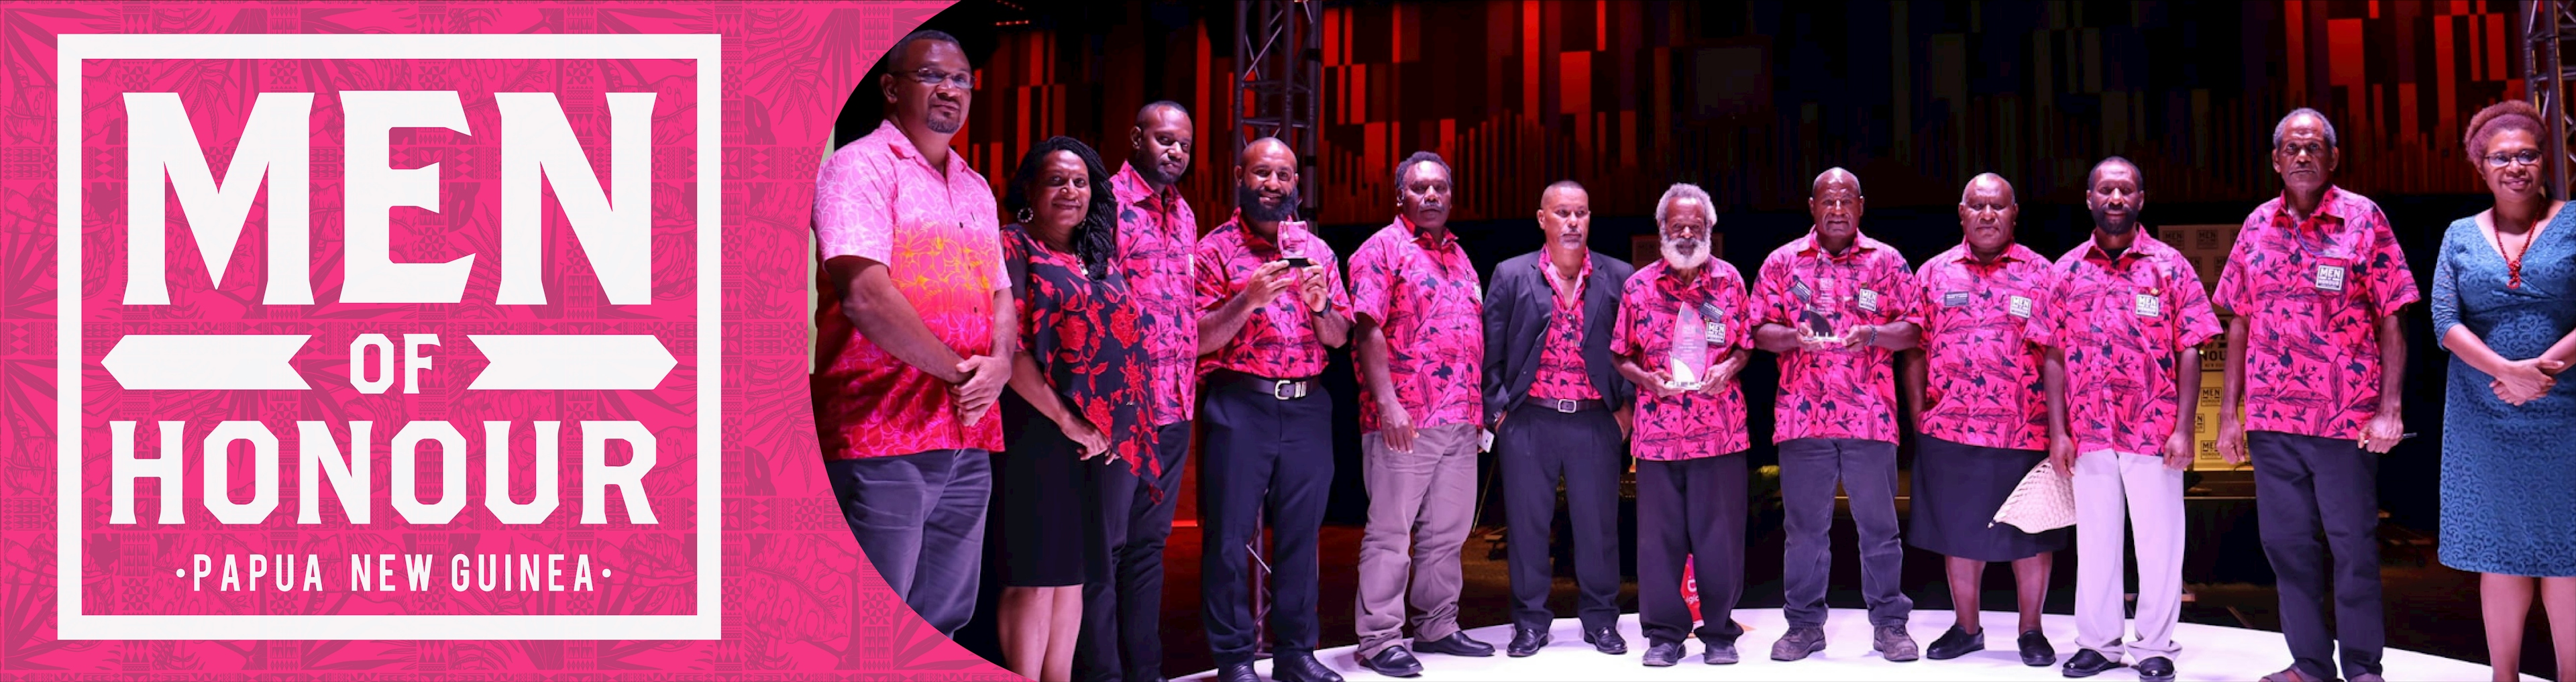 A group of men wearing pink shirts receiving awards